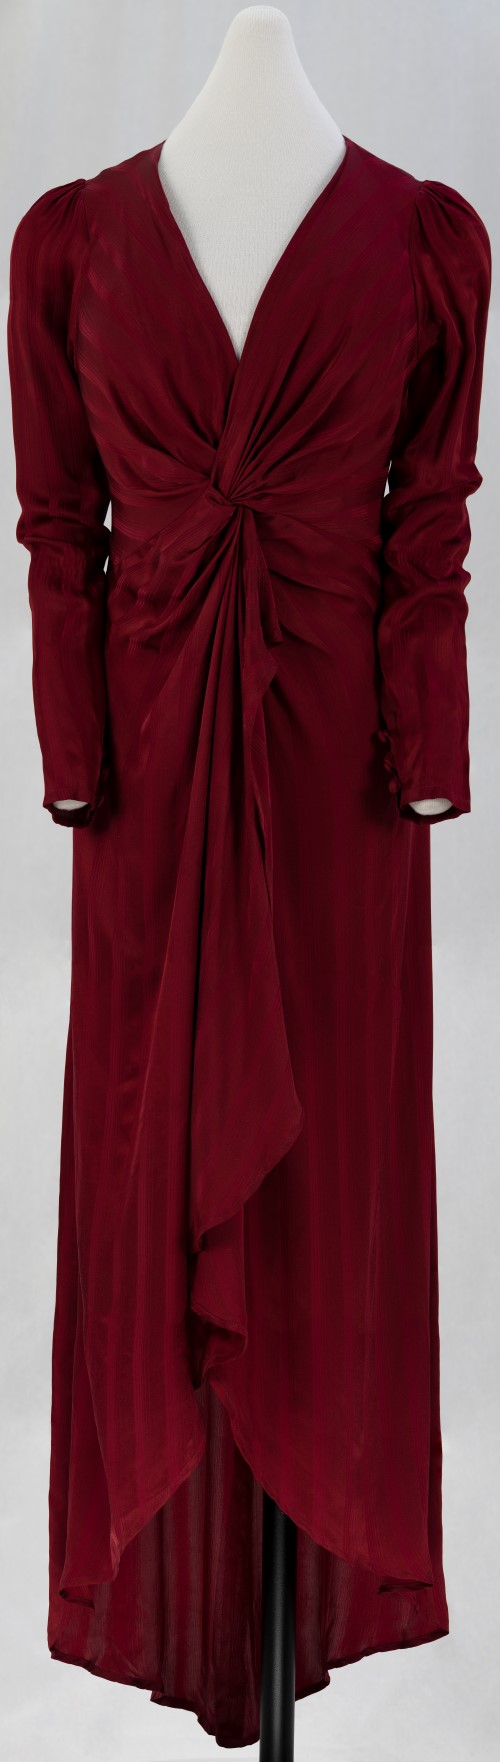 Carol MacGregor's Inaugural Dress: Front